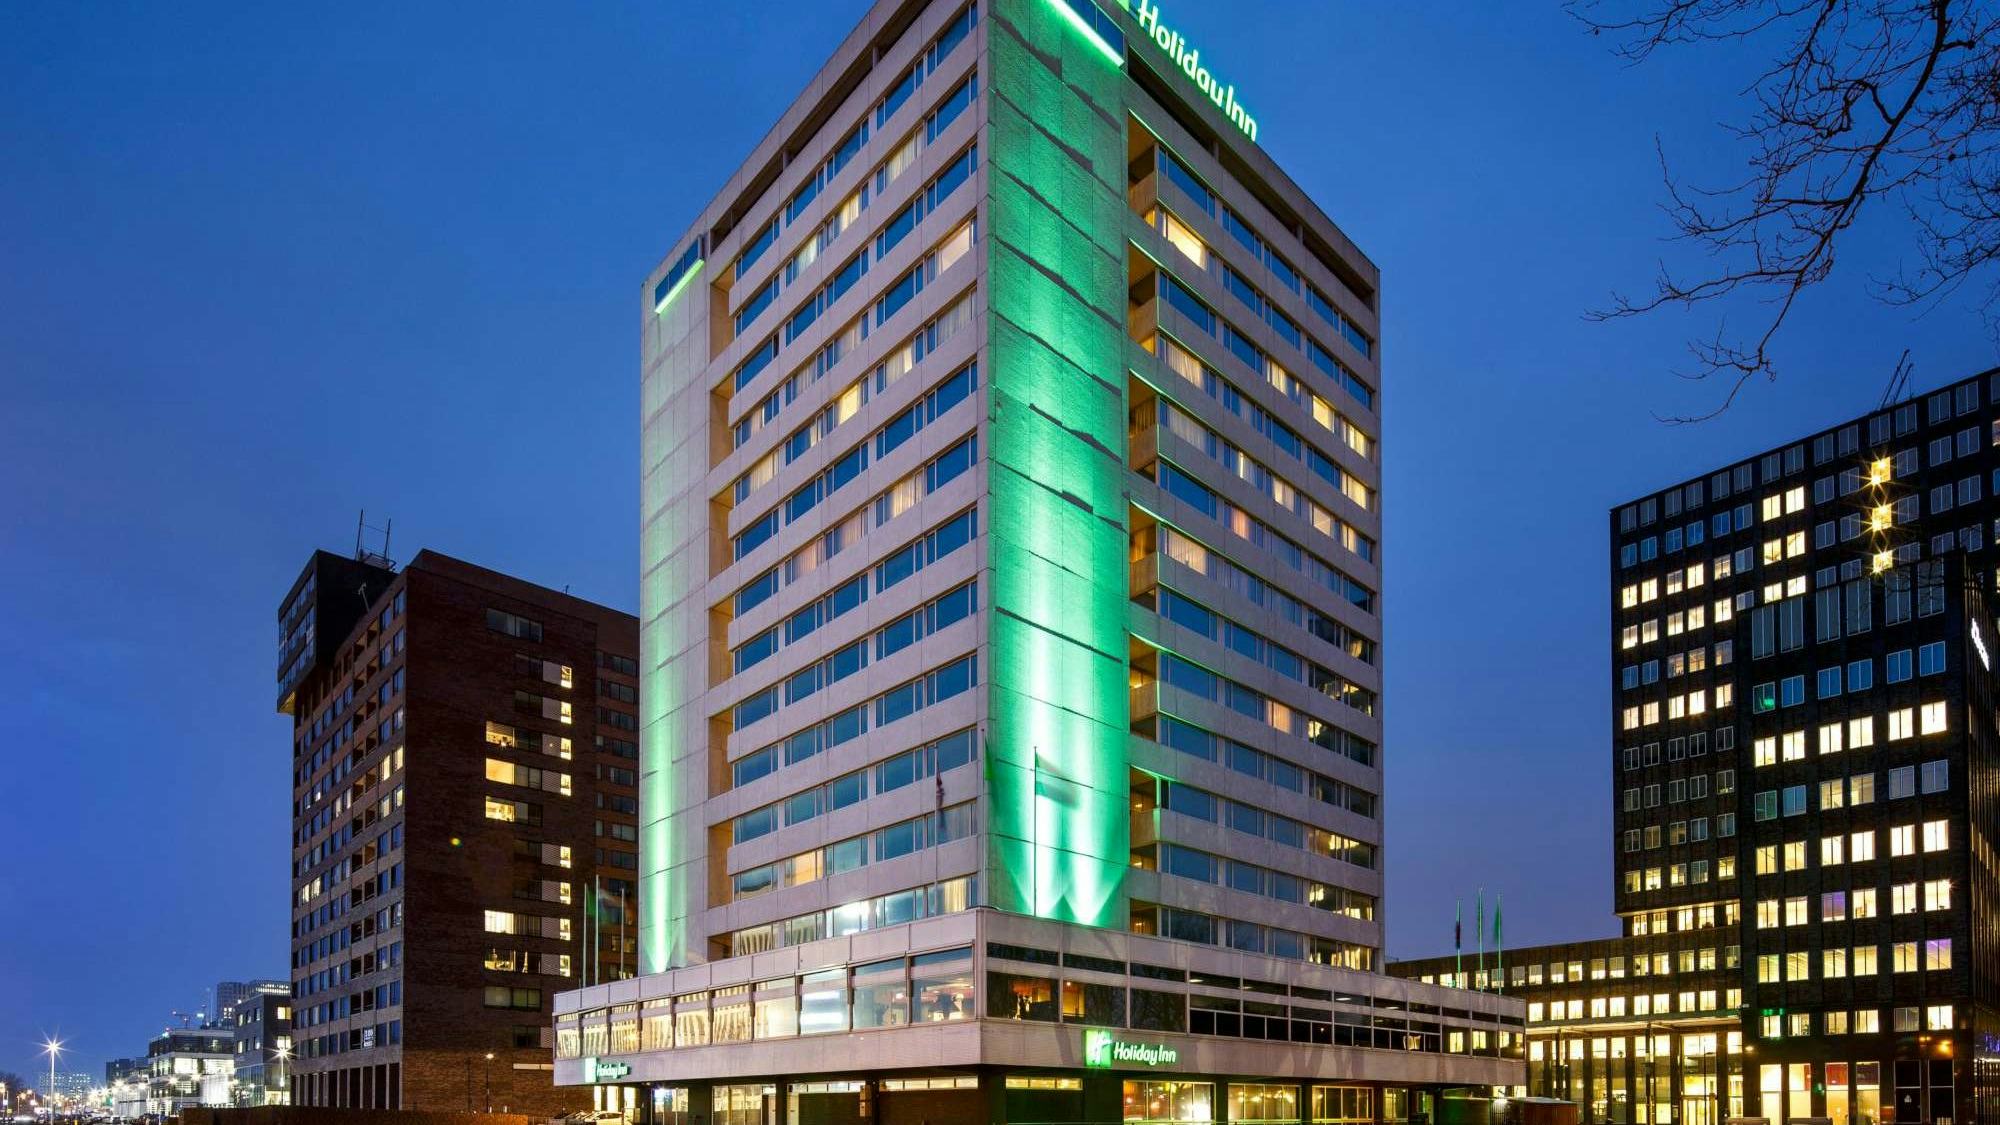 Westmont neemt exploitatie twee failliete IHG hotels Amsterdam over